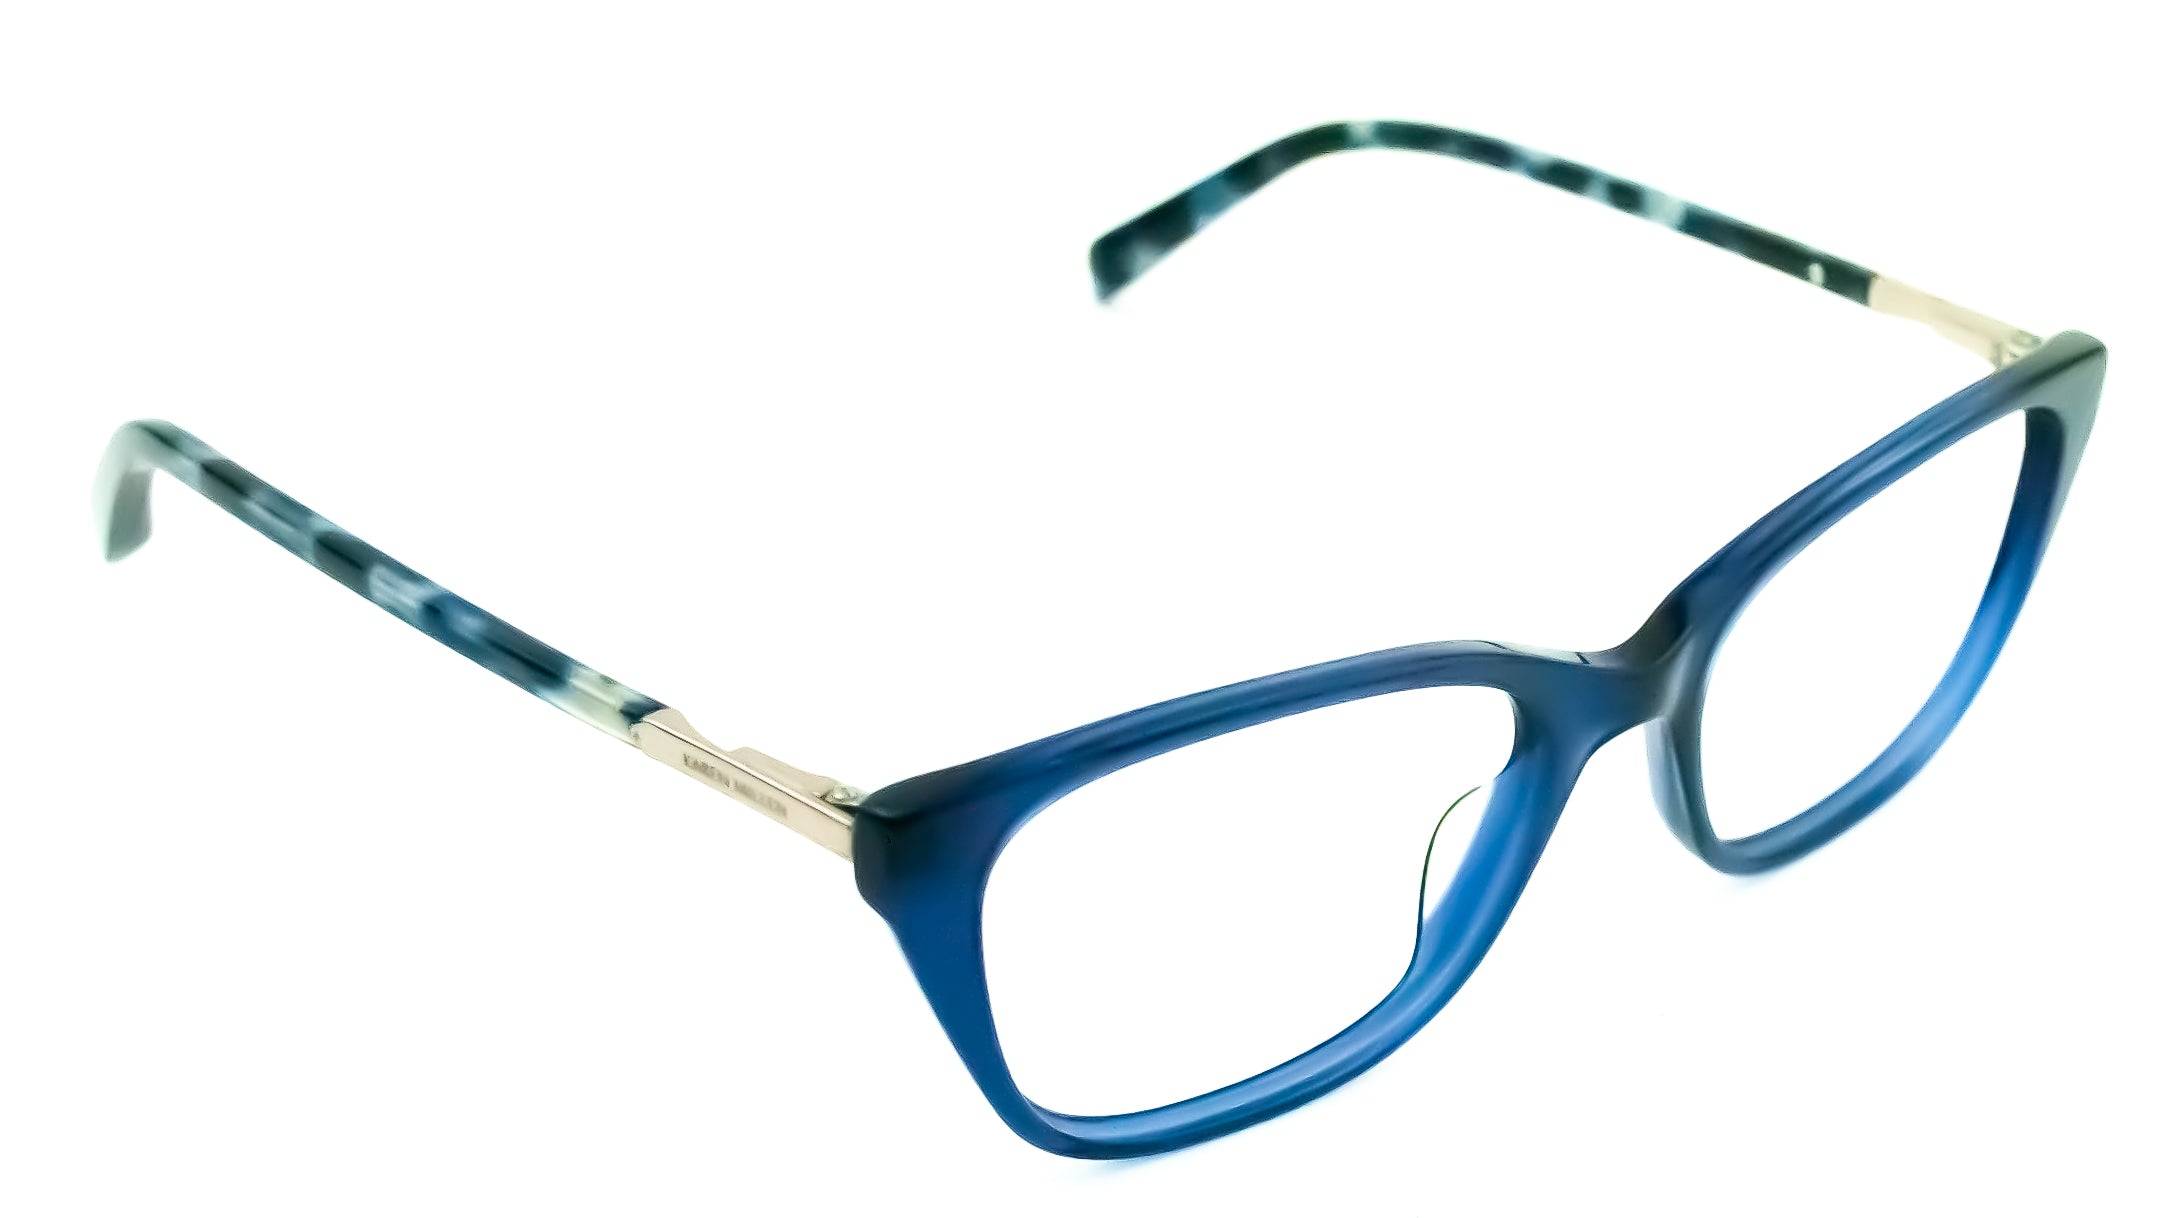 Karen Millen Navy Cateye Glasses Frames